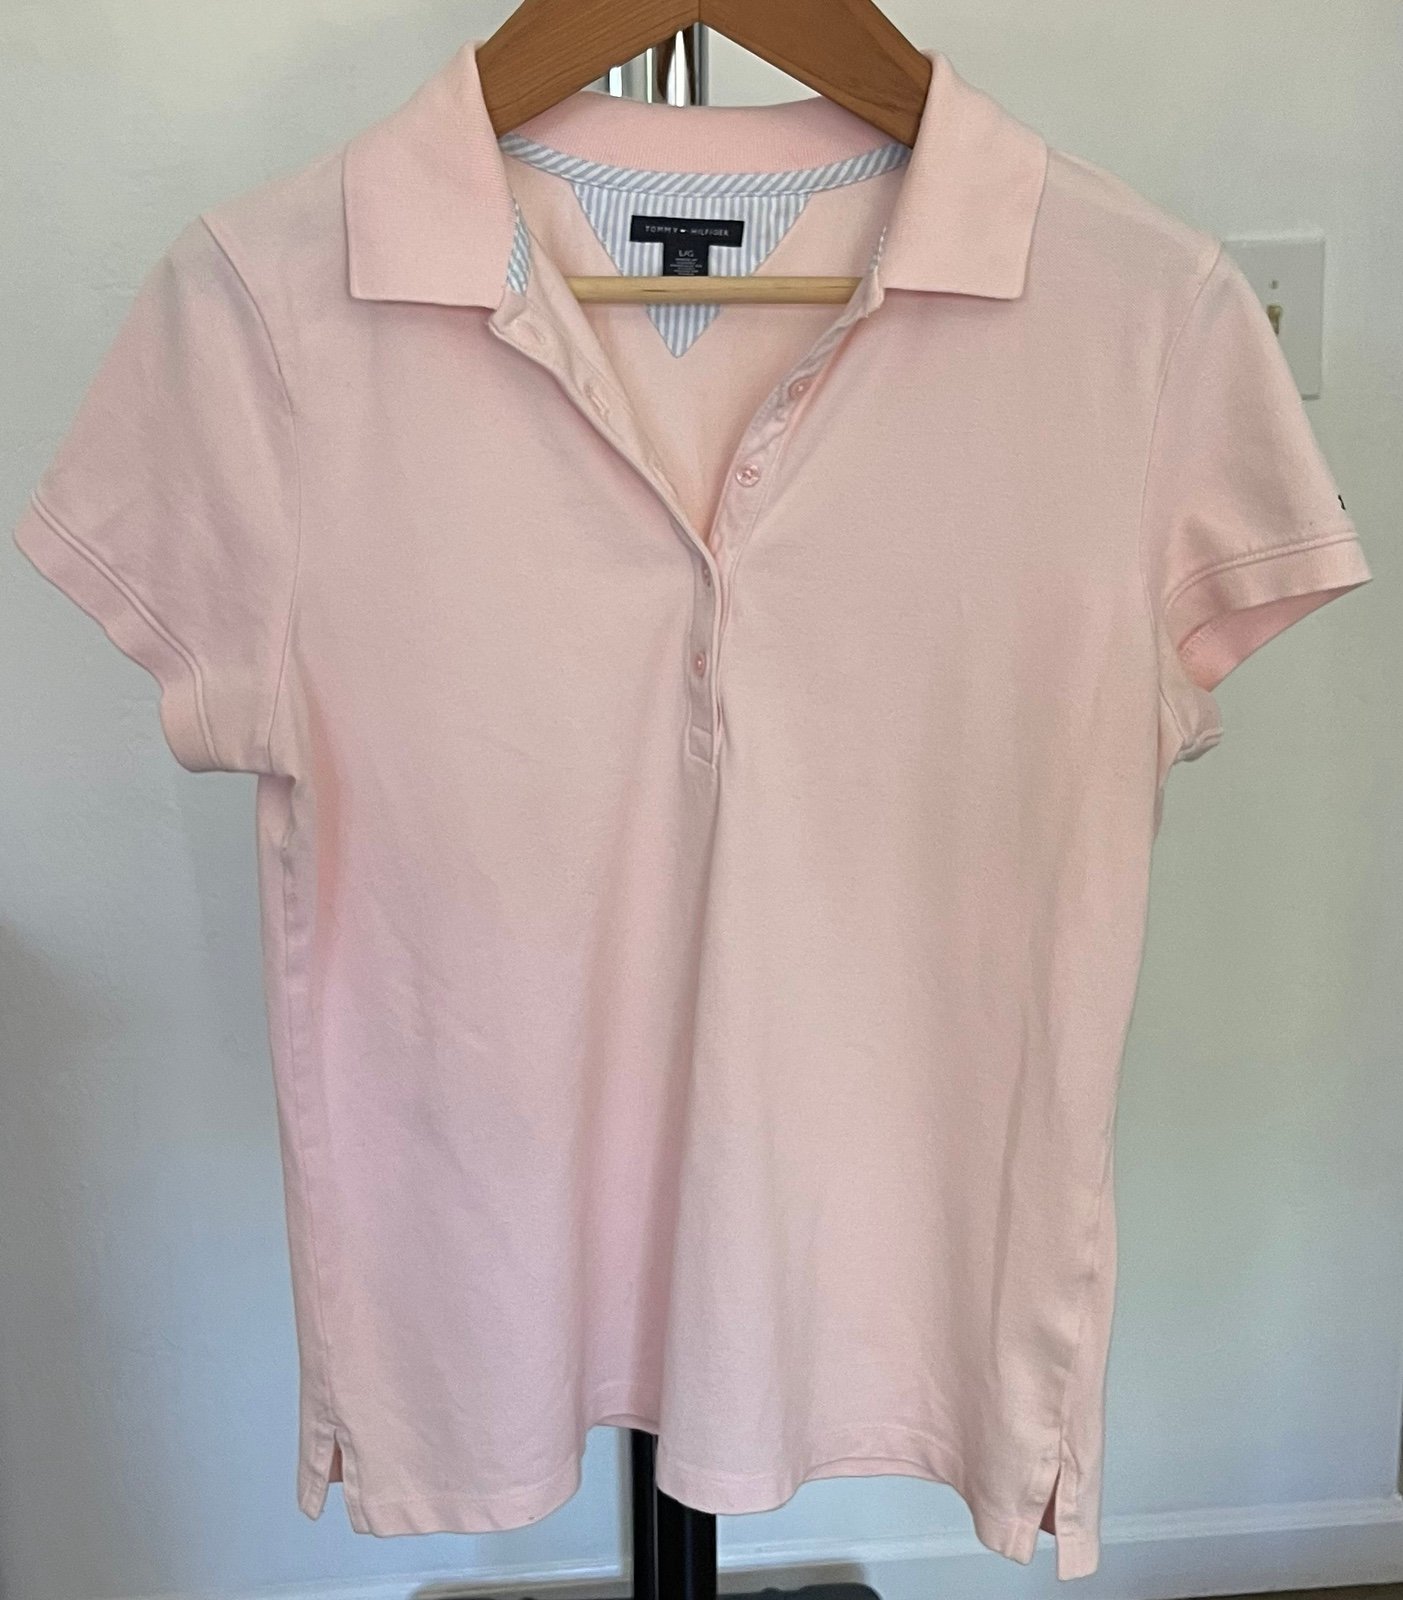 Classic Tommy Hilfiger Women’s Pink Polo Short Sleeve Top Size Large lFAgXY5KL Zero Profit 